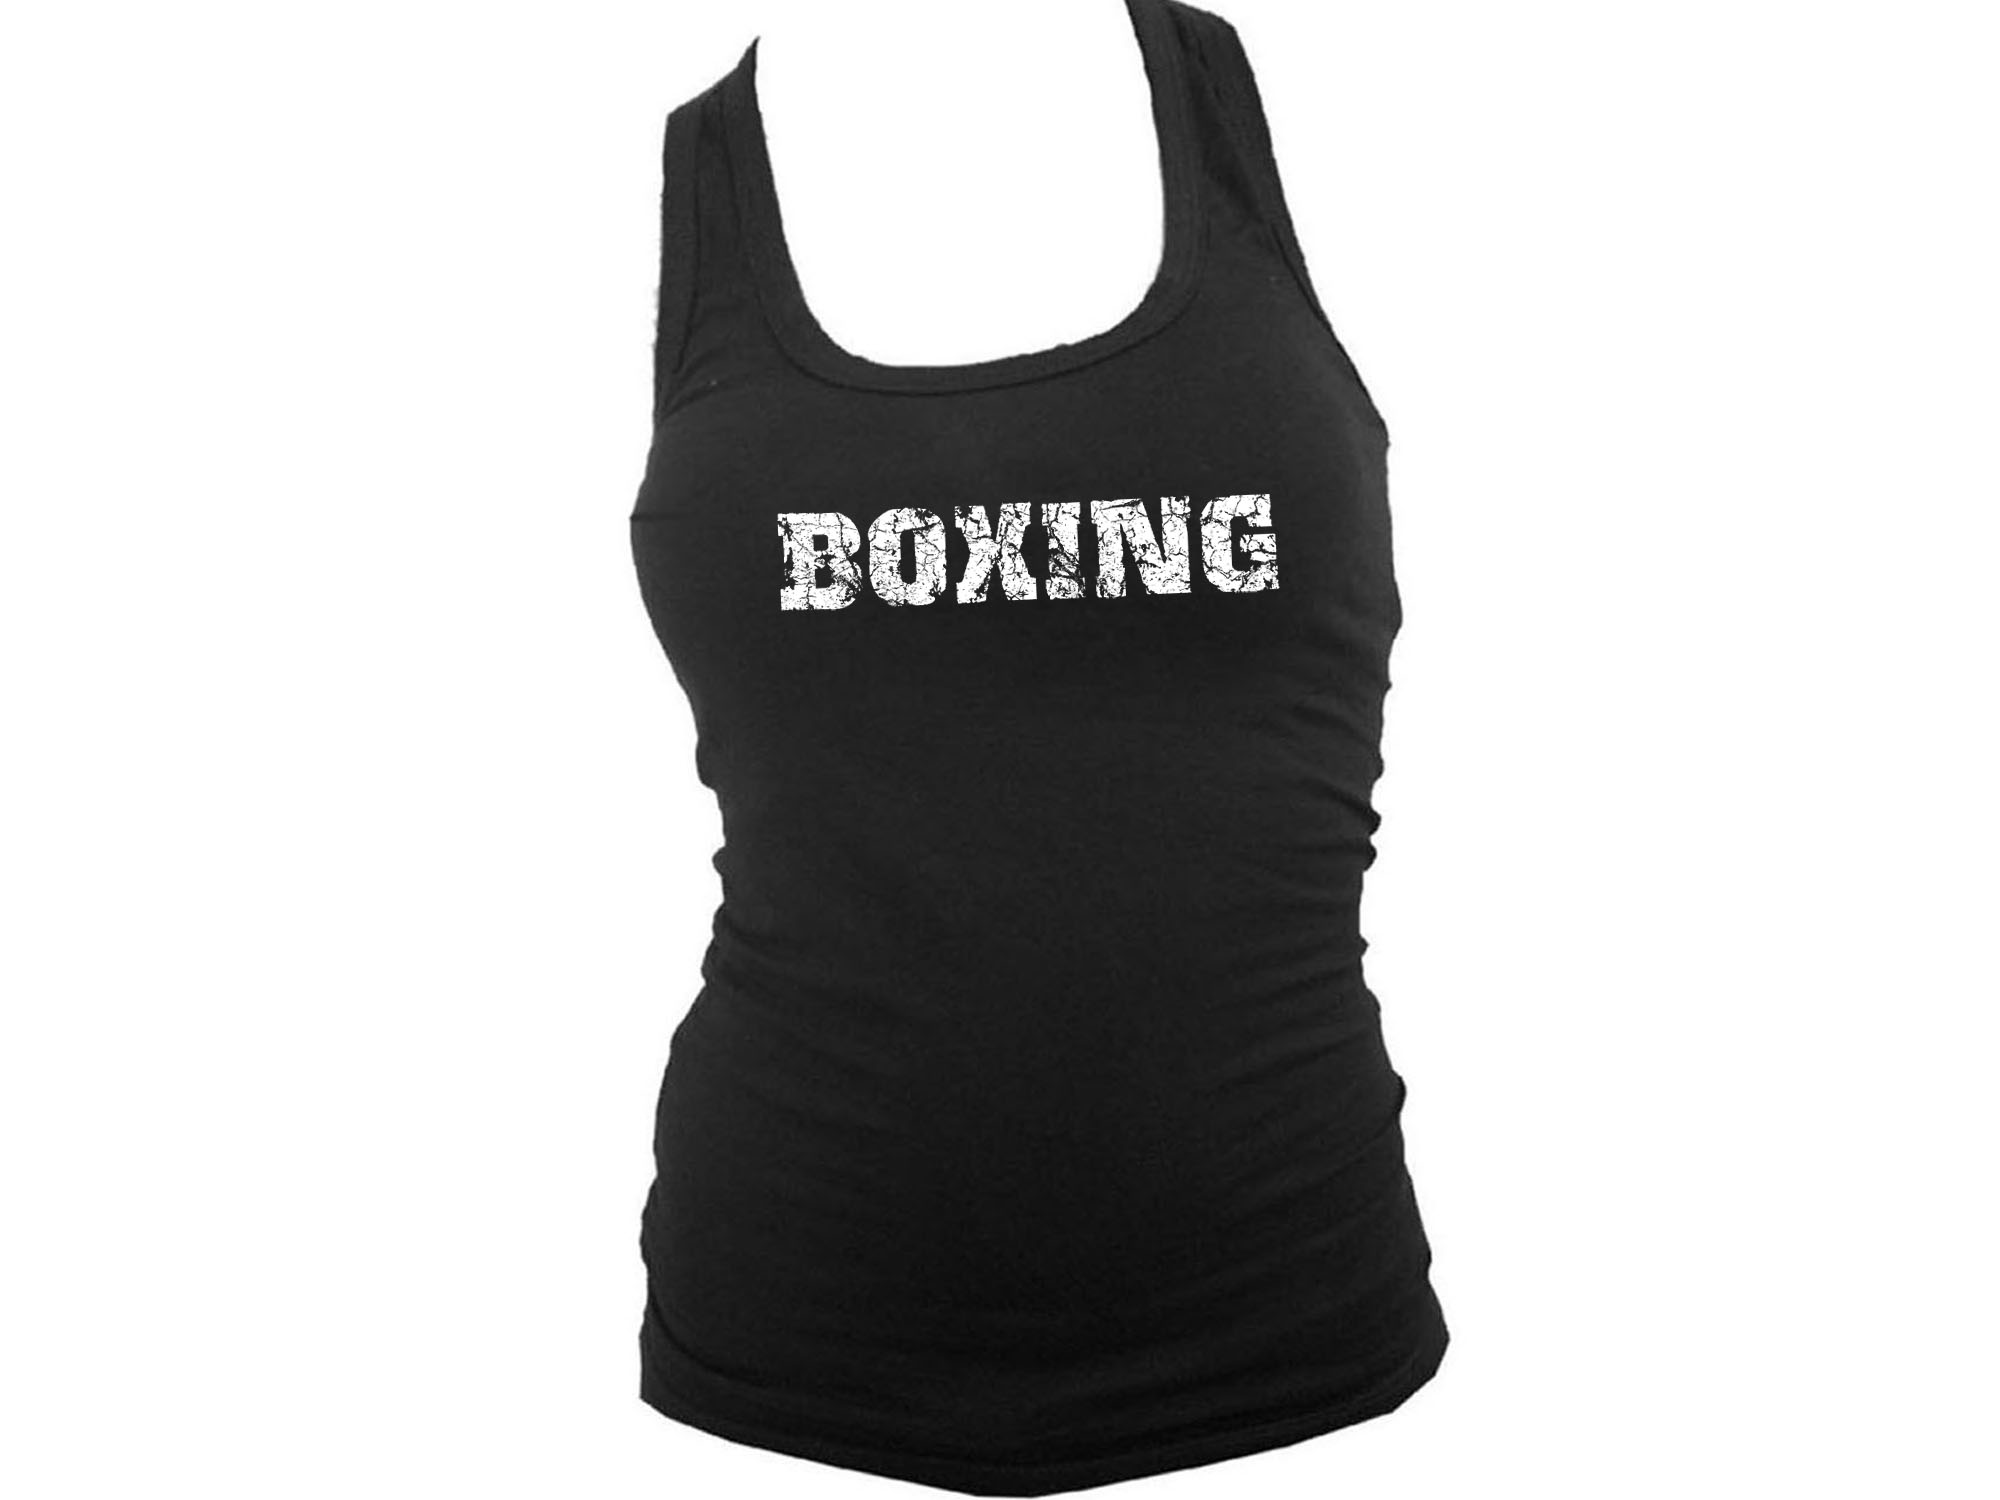 Boxing distressed print women tank top L/XL